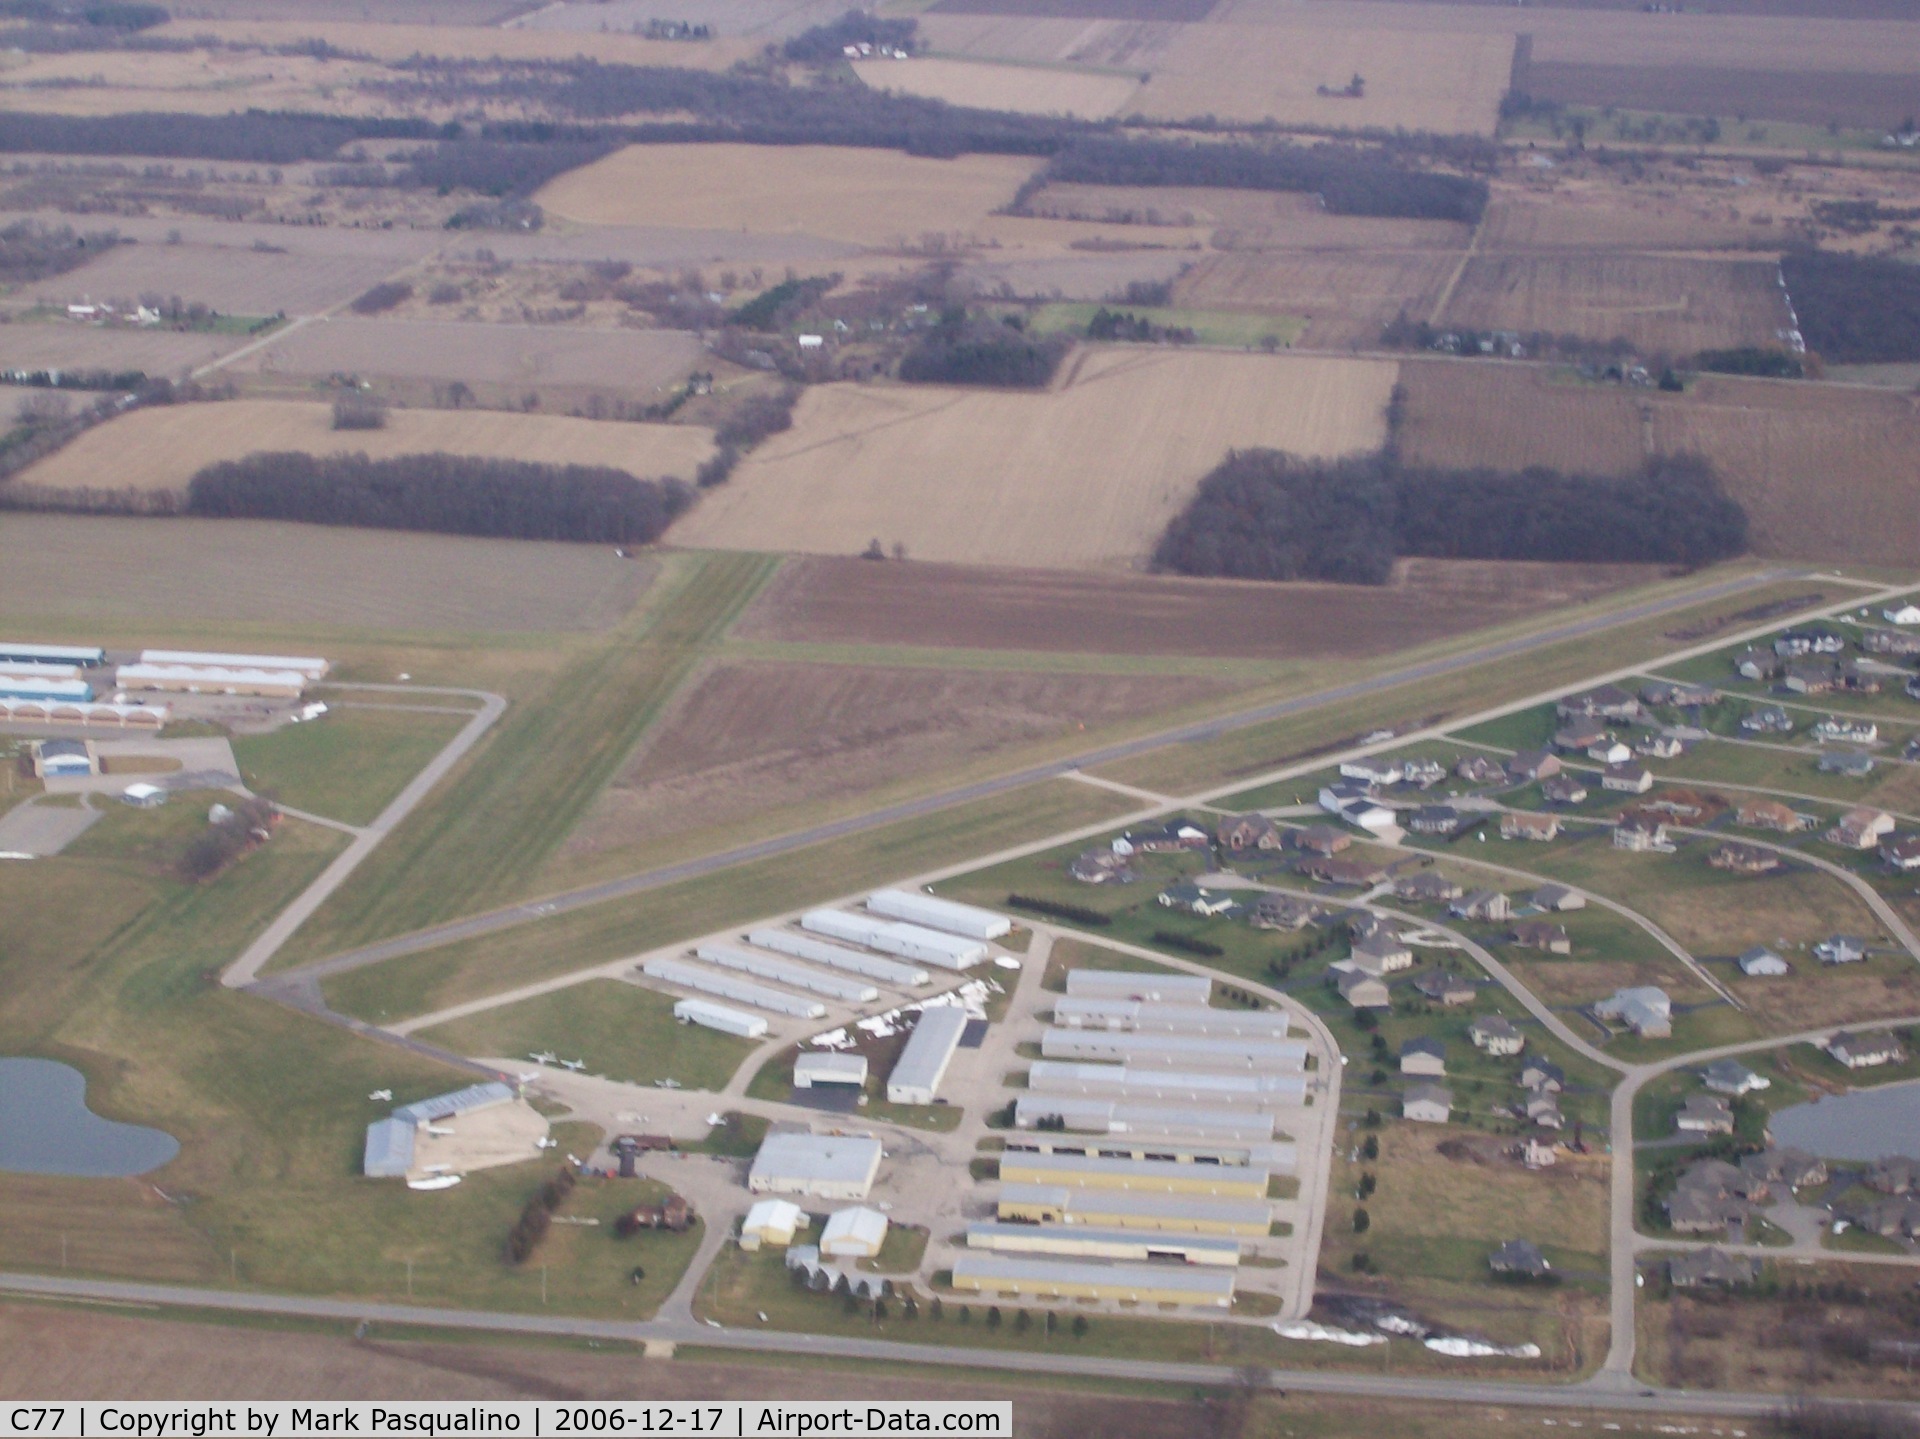 Poplar Grove Airport (C77) - Poplar Grove, IL